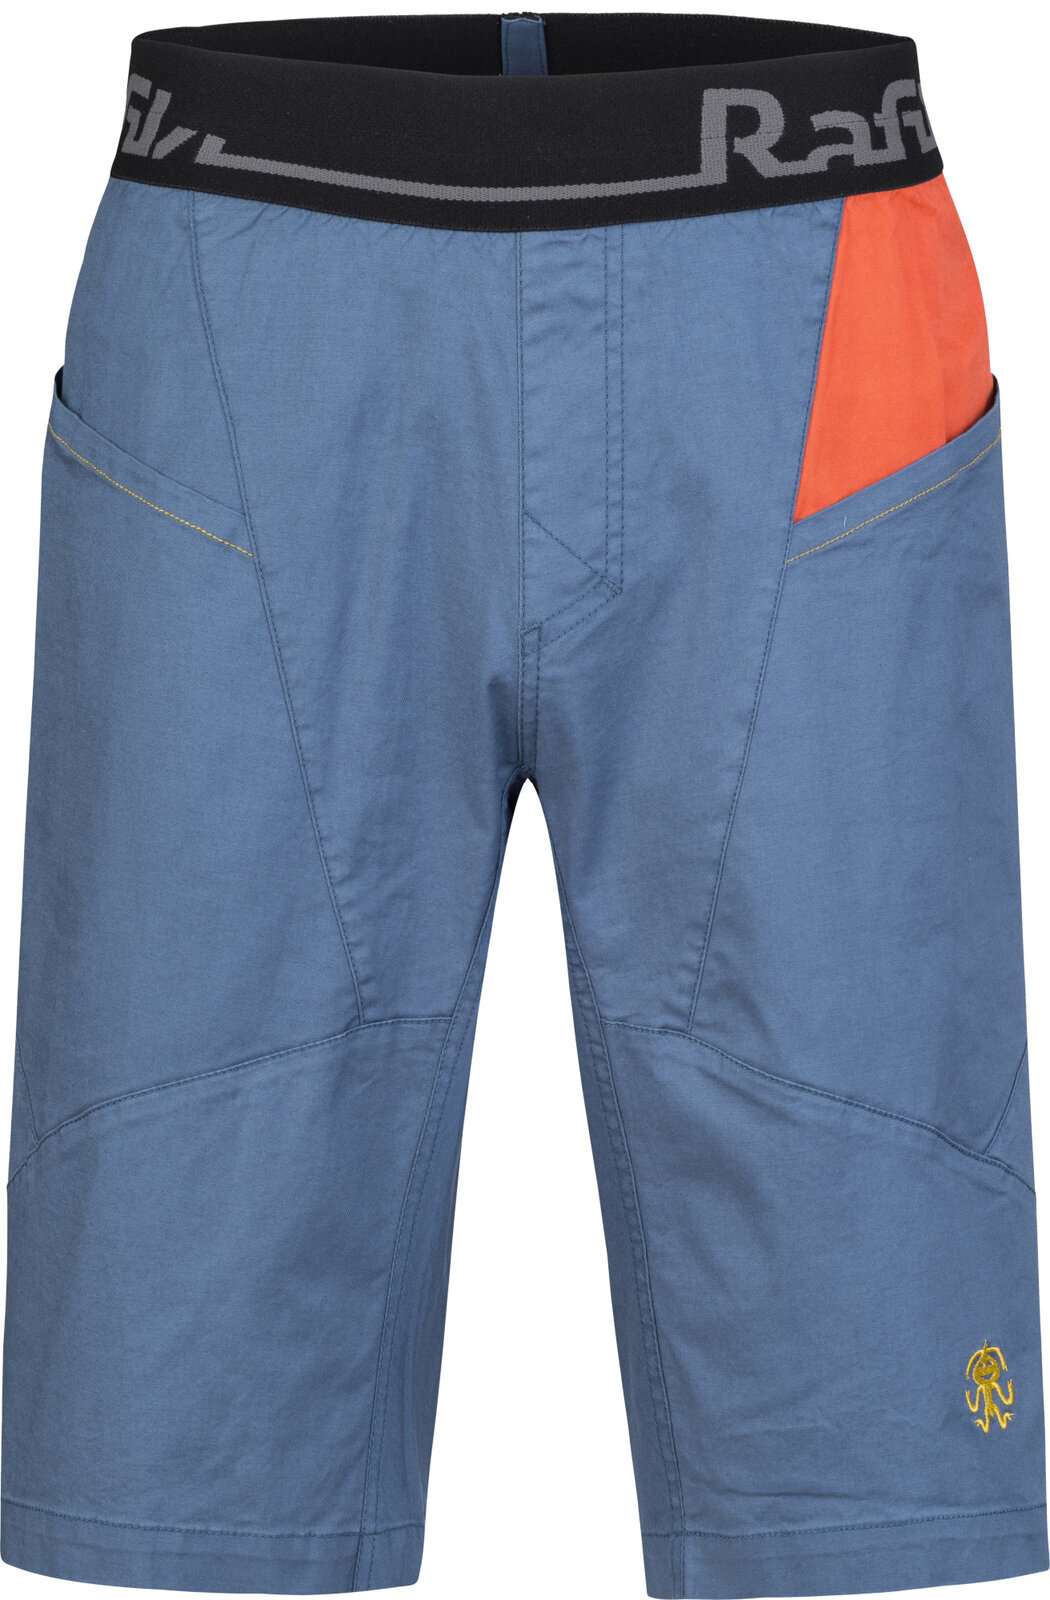 Outdoorshorts Rafiki Megos Man Shorts Ensign Blue/Clay M Outdoorshorts